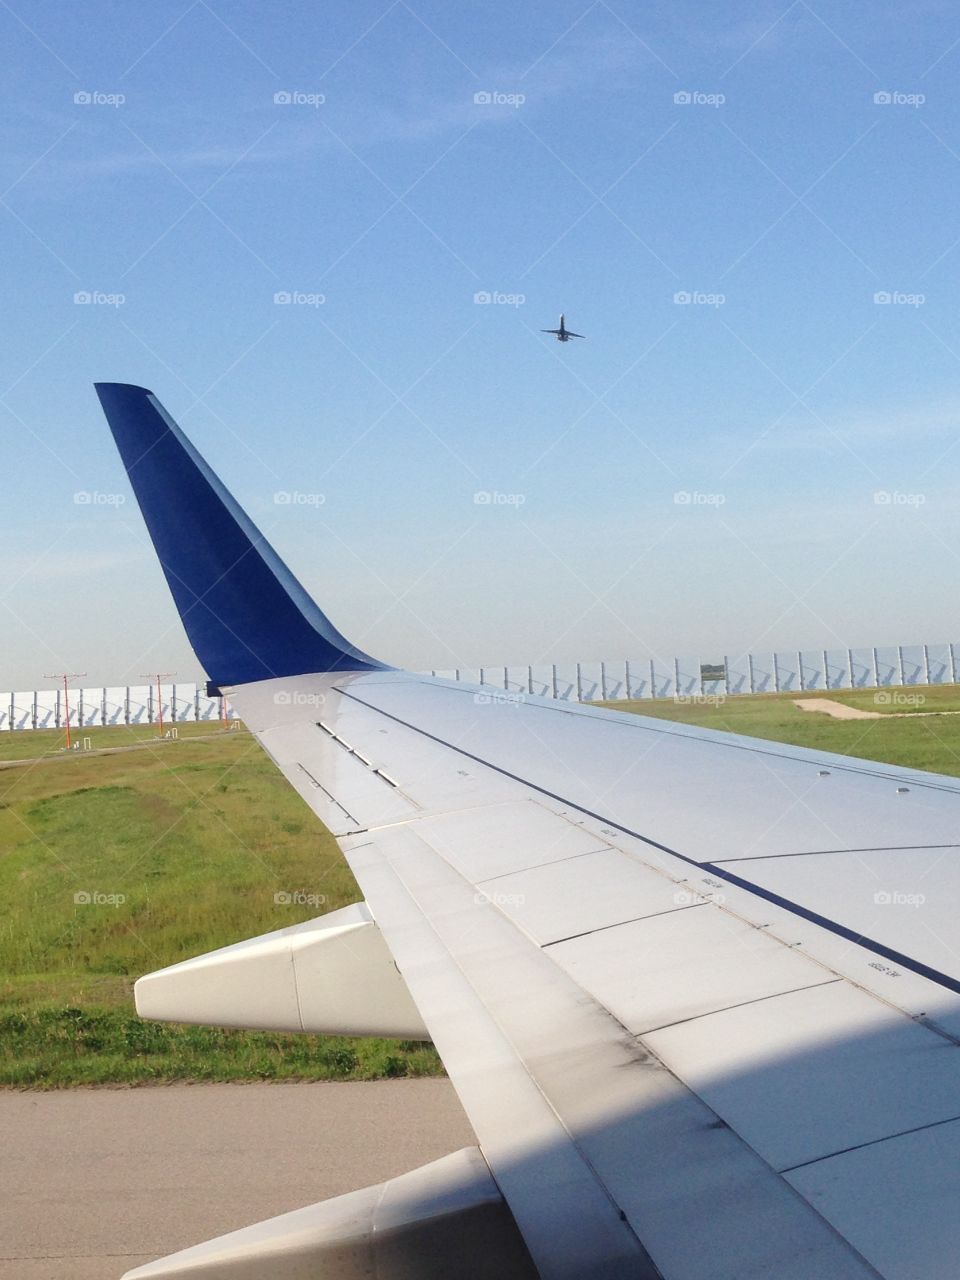 Wing man. Airplanes on runway 